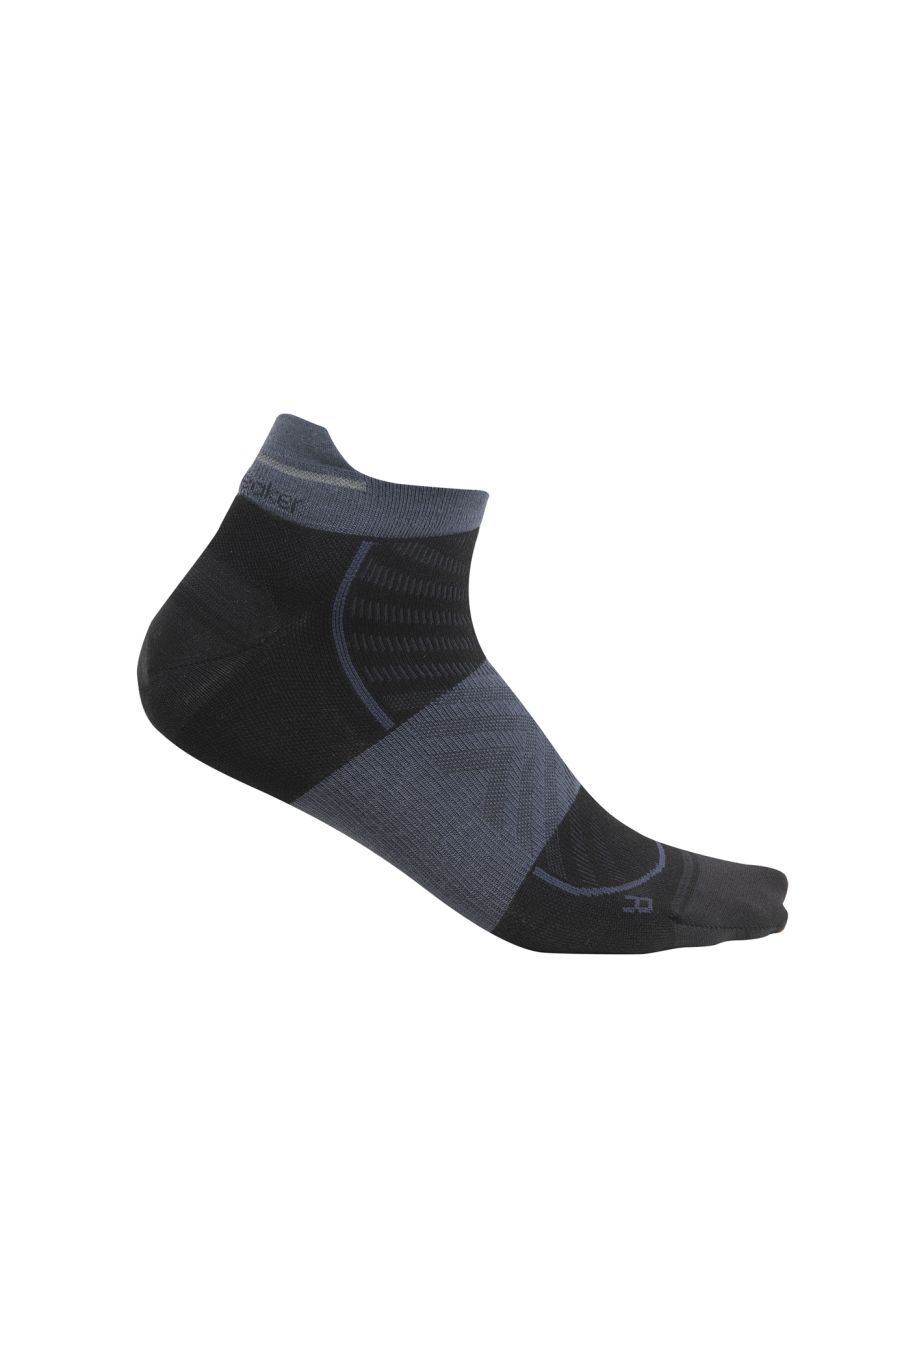 Pánské merino ponožky ICEBREAKER Mens Merino Run+ Ultralight Micro, Black/Graphite velikost: 42-44 (M)